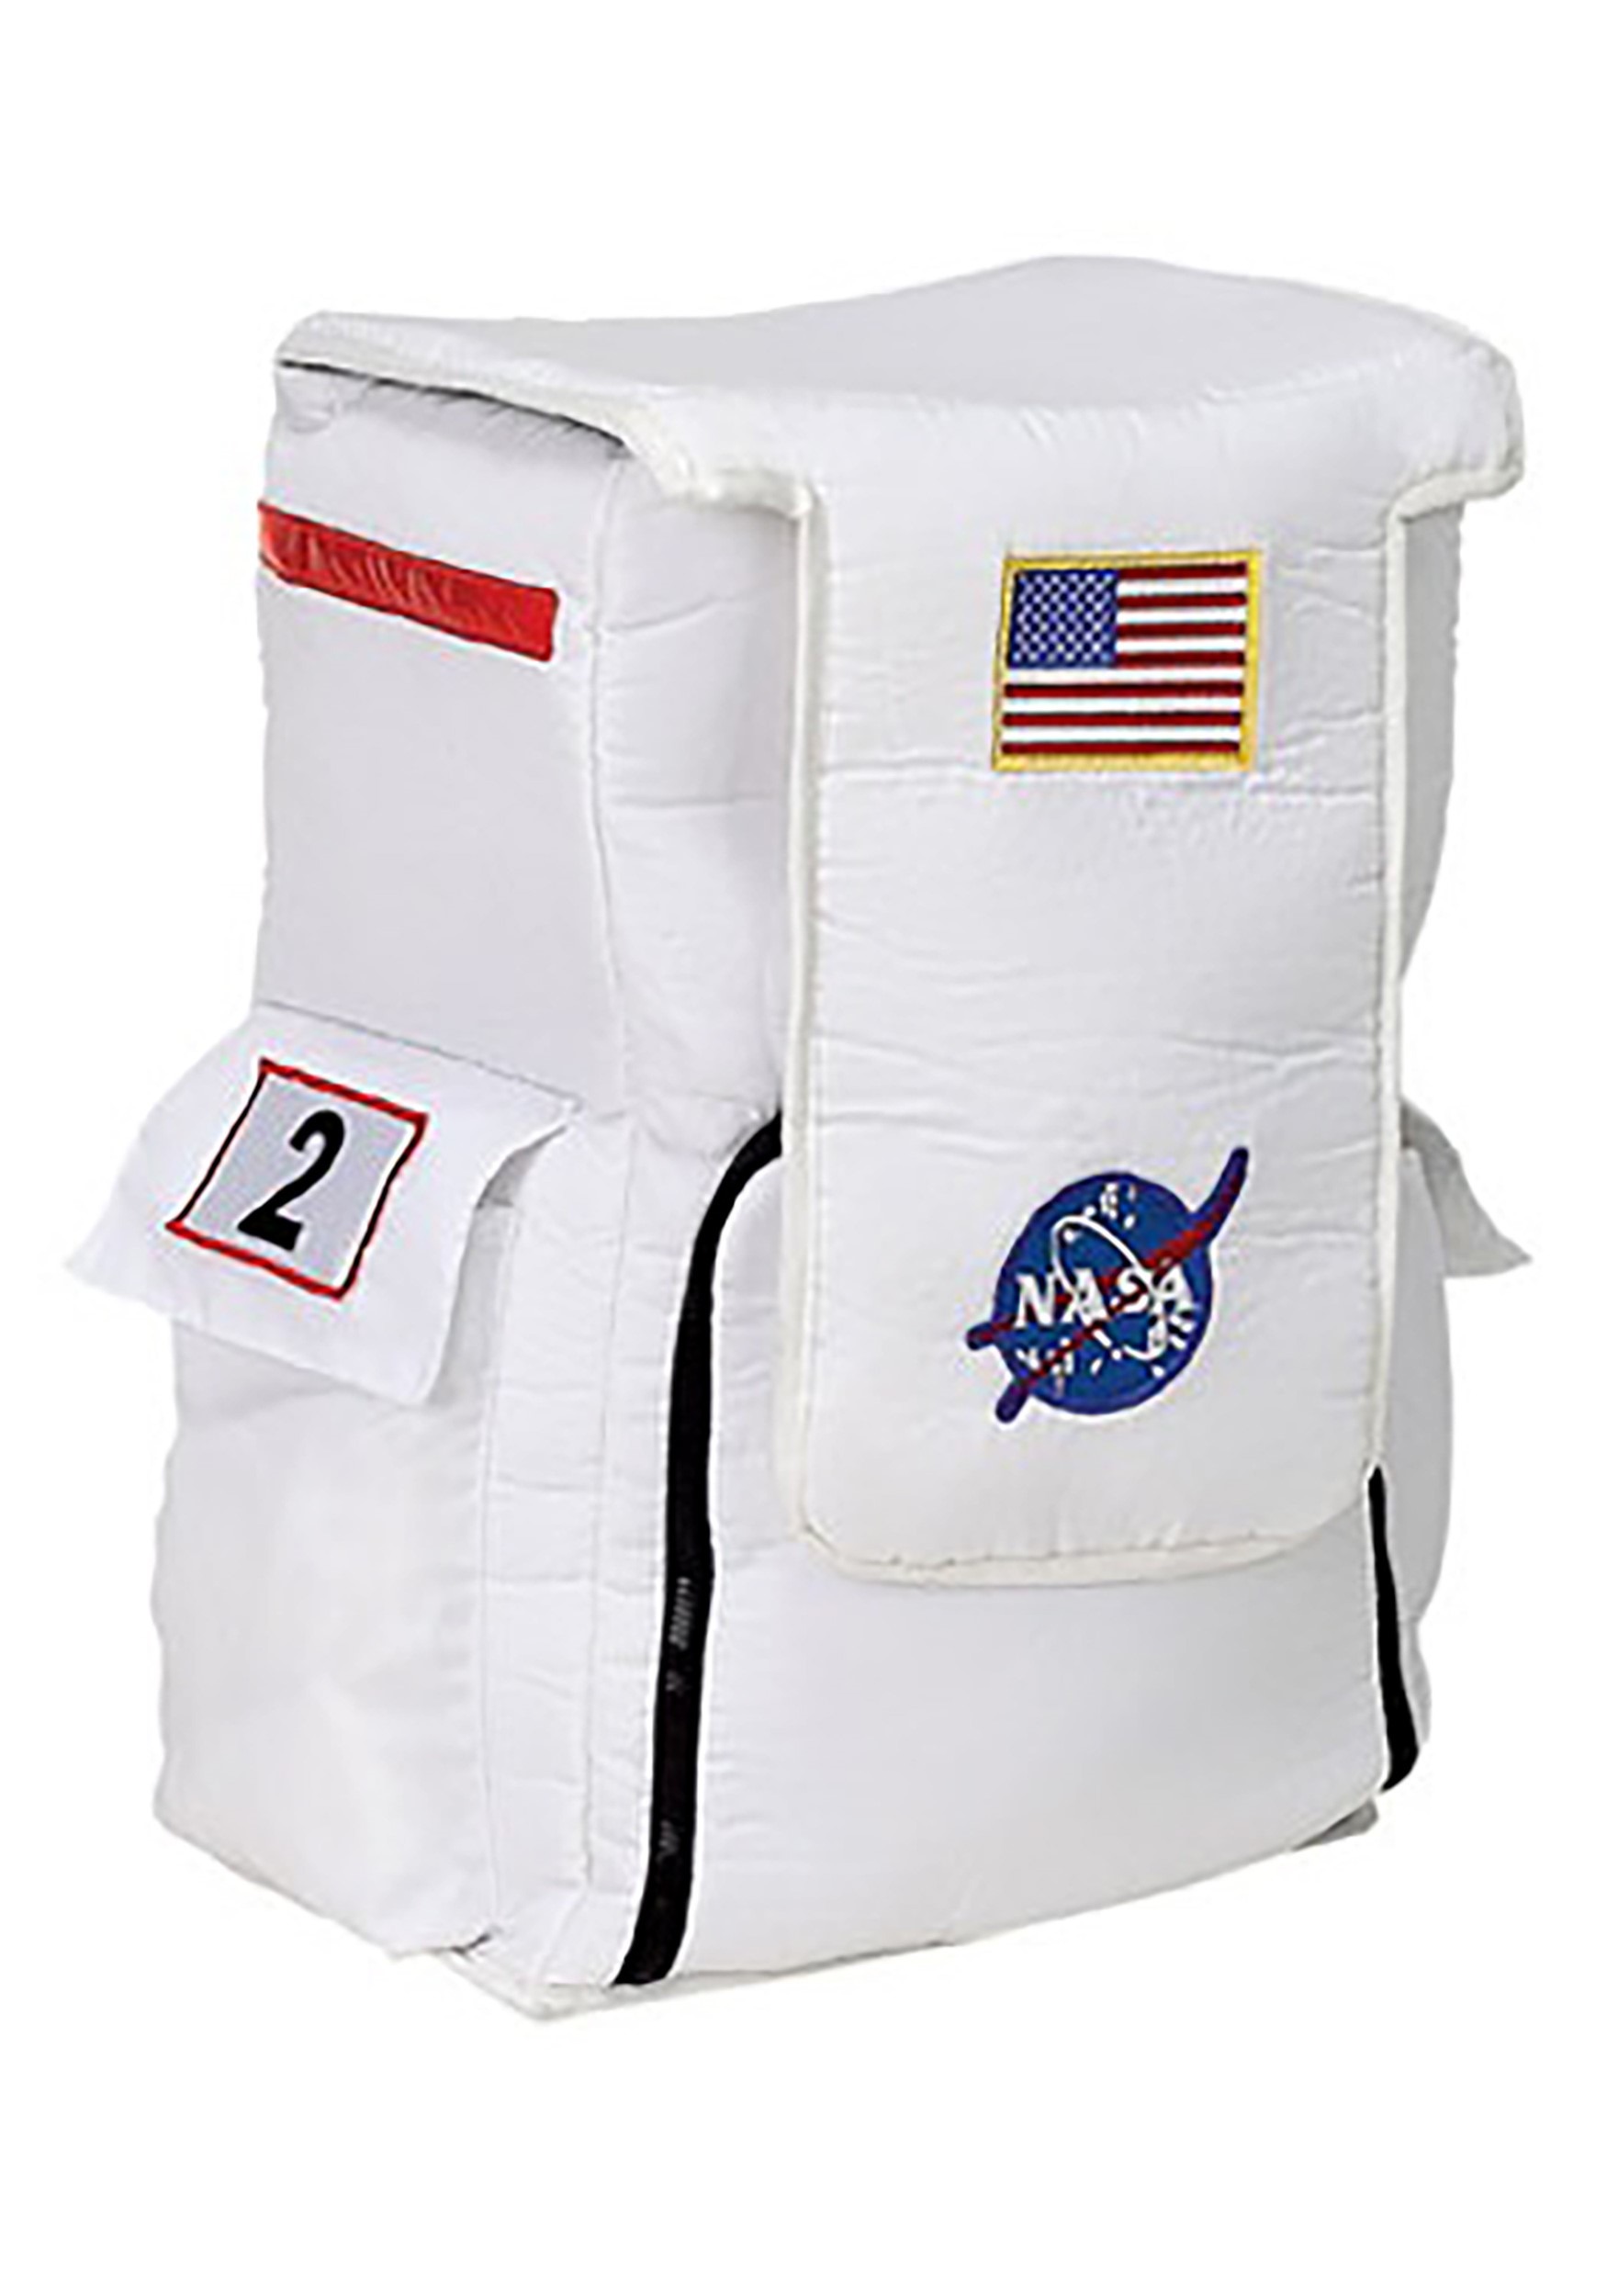 Kids Astronaut Backpack , Astronaut Costume Backpack